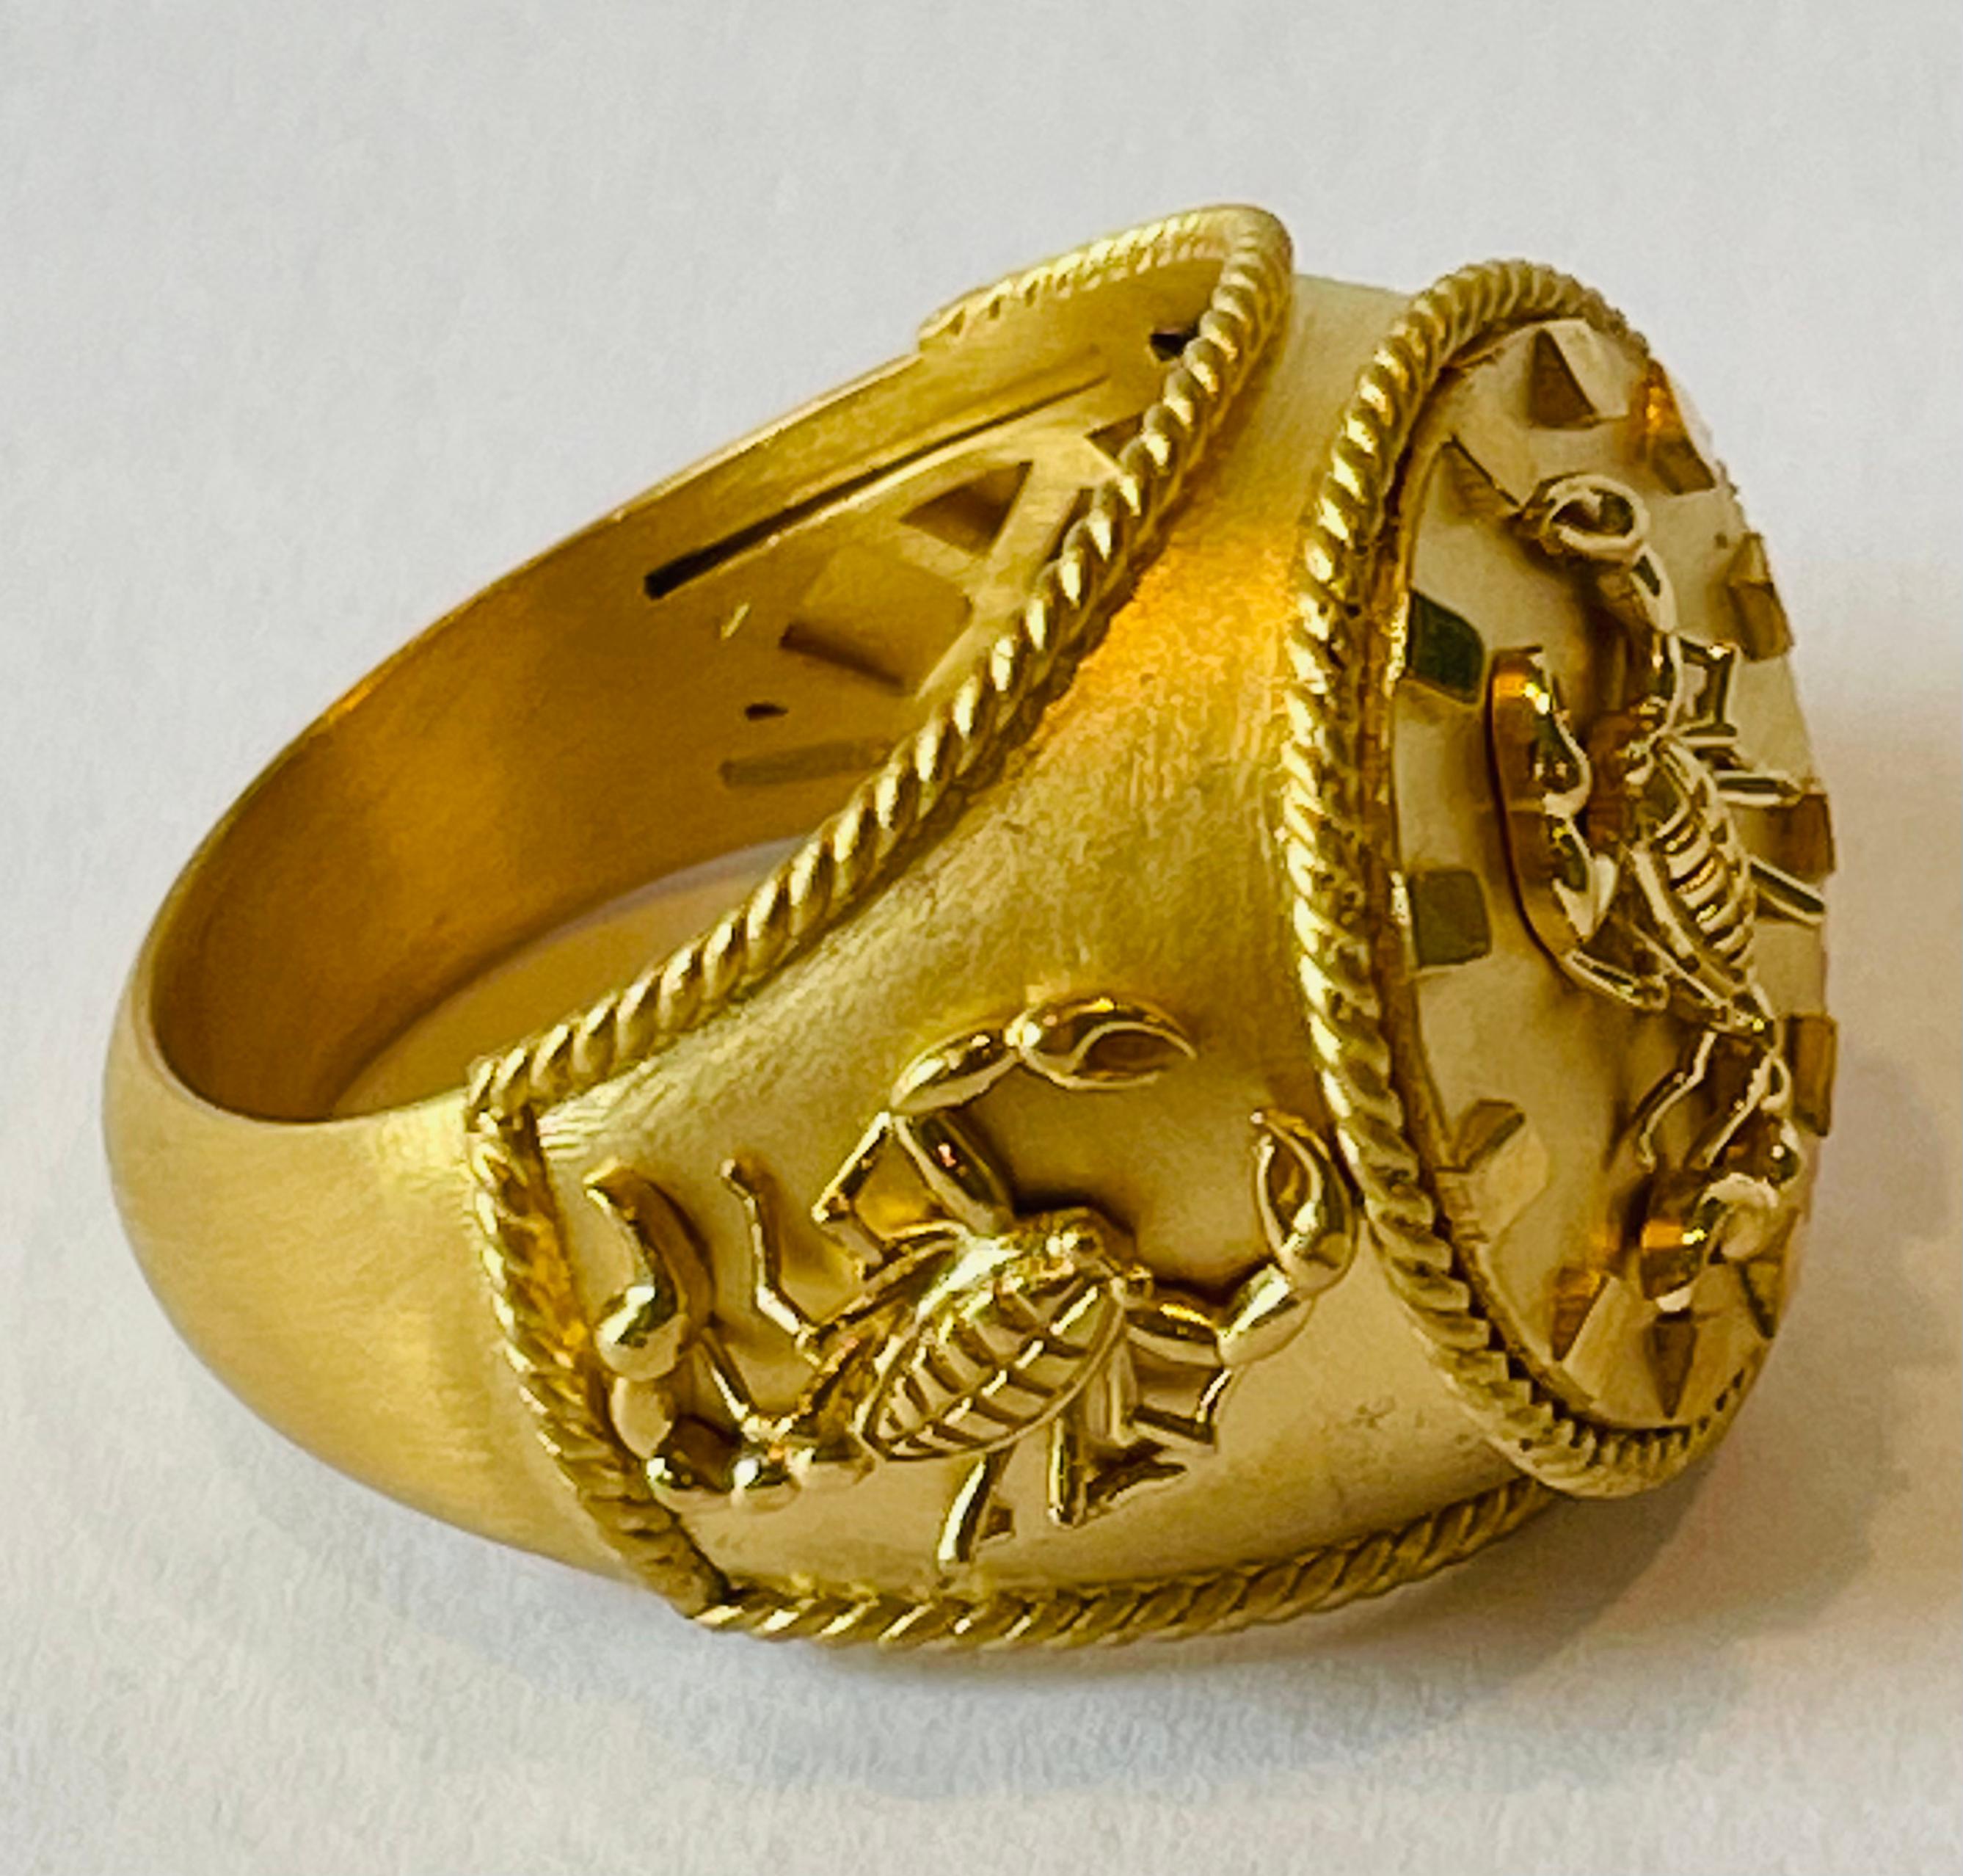 Art Deco Zodiac Scorpion Ring in 22k Gold by Tagili For Sale